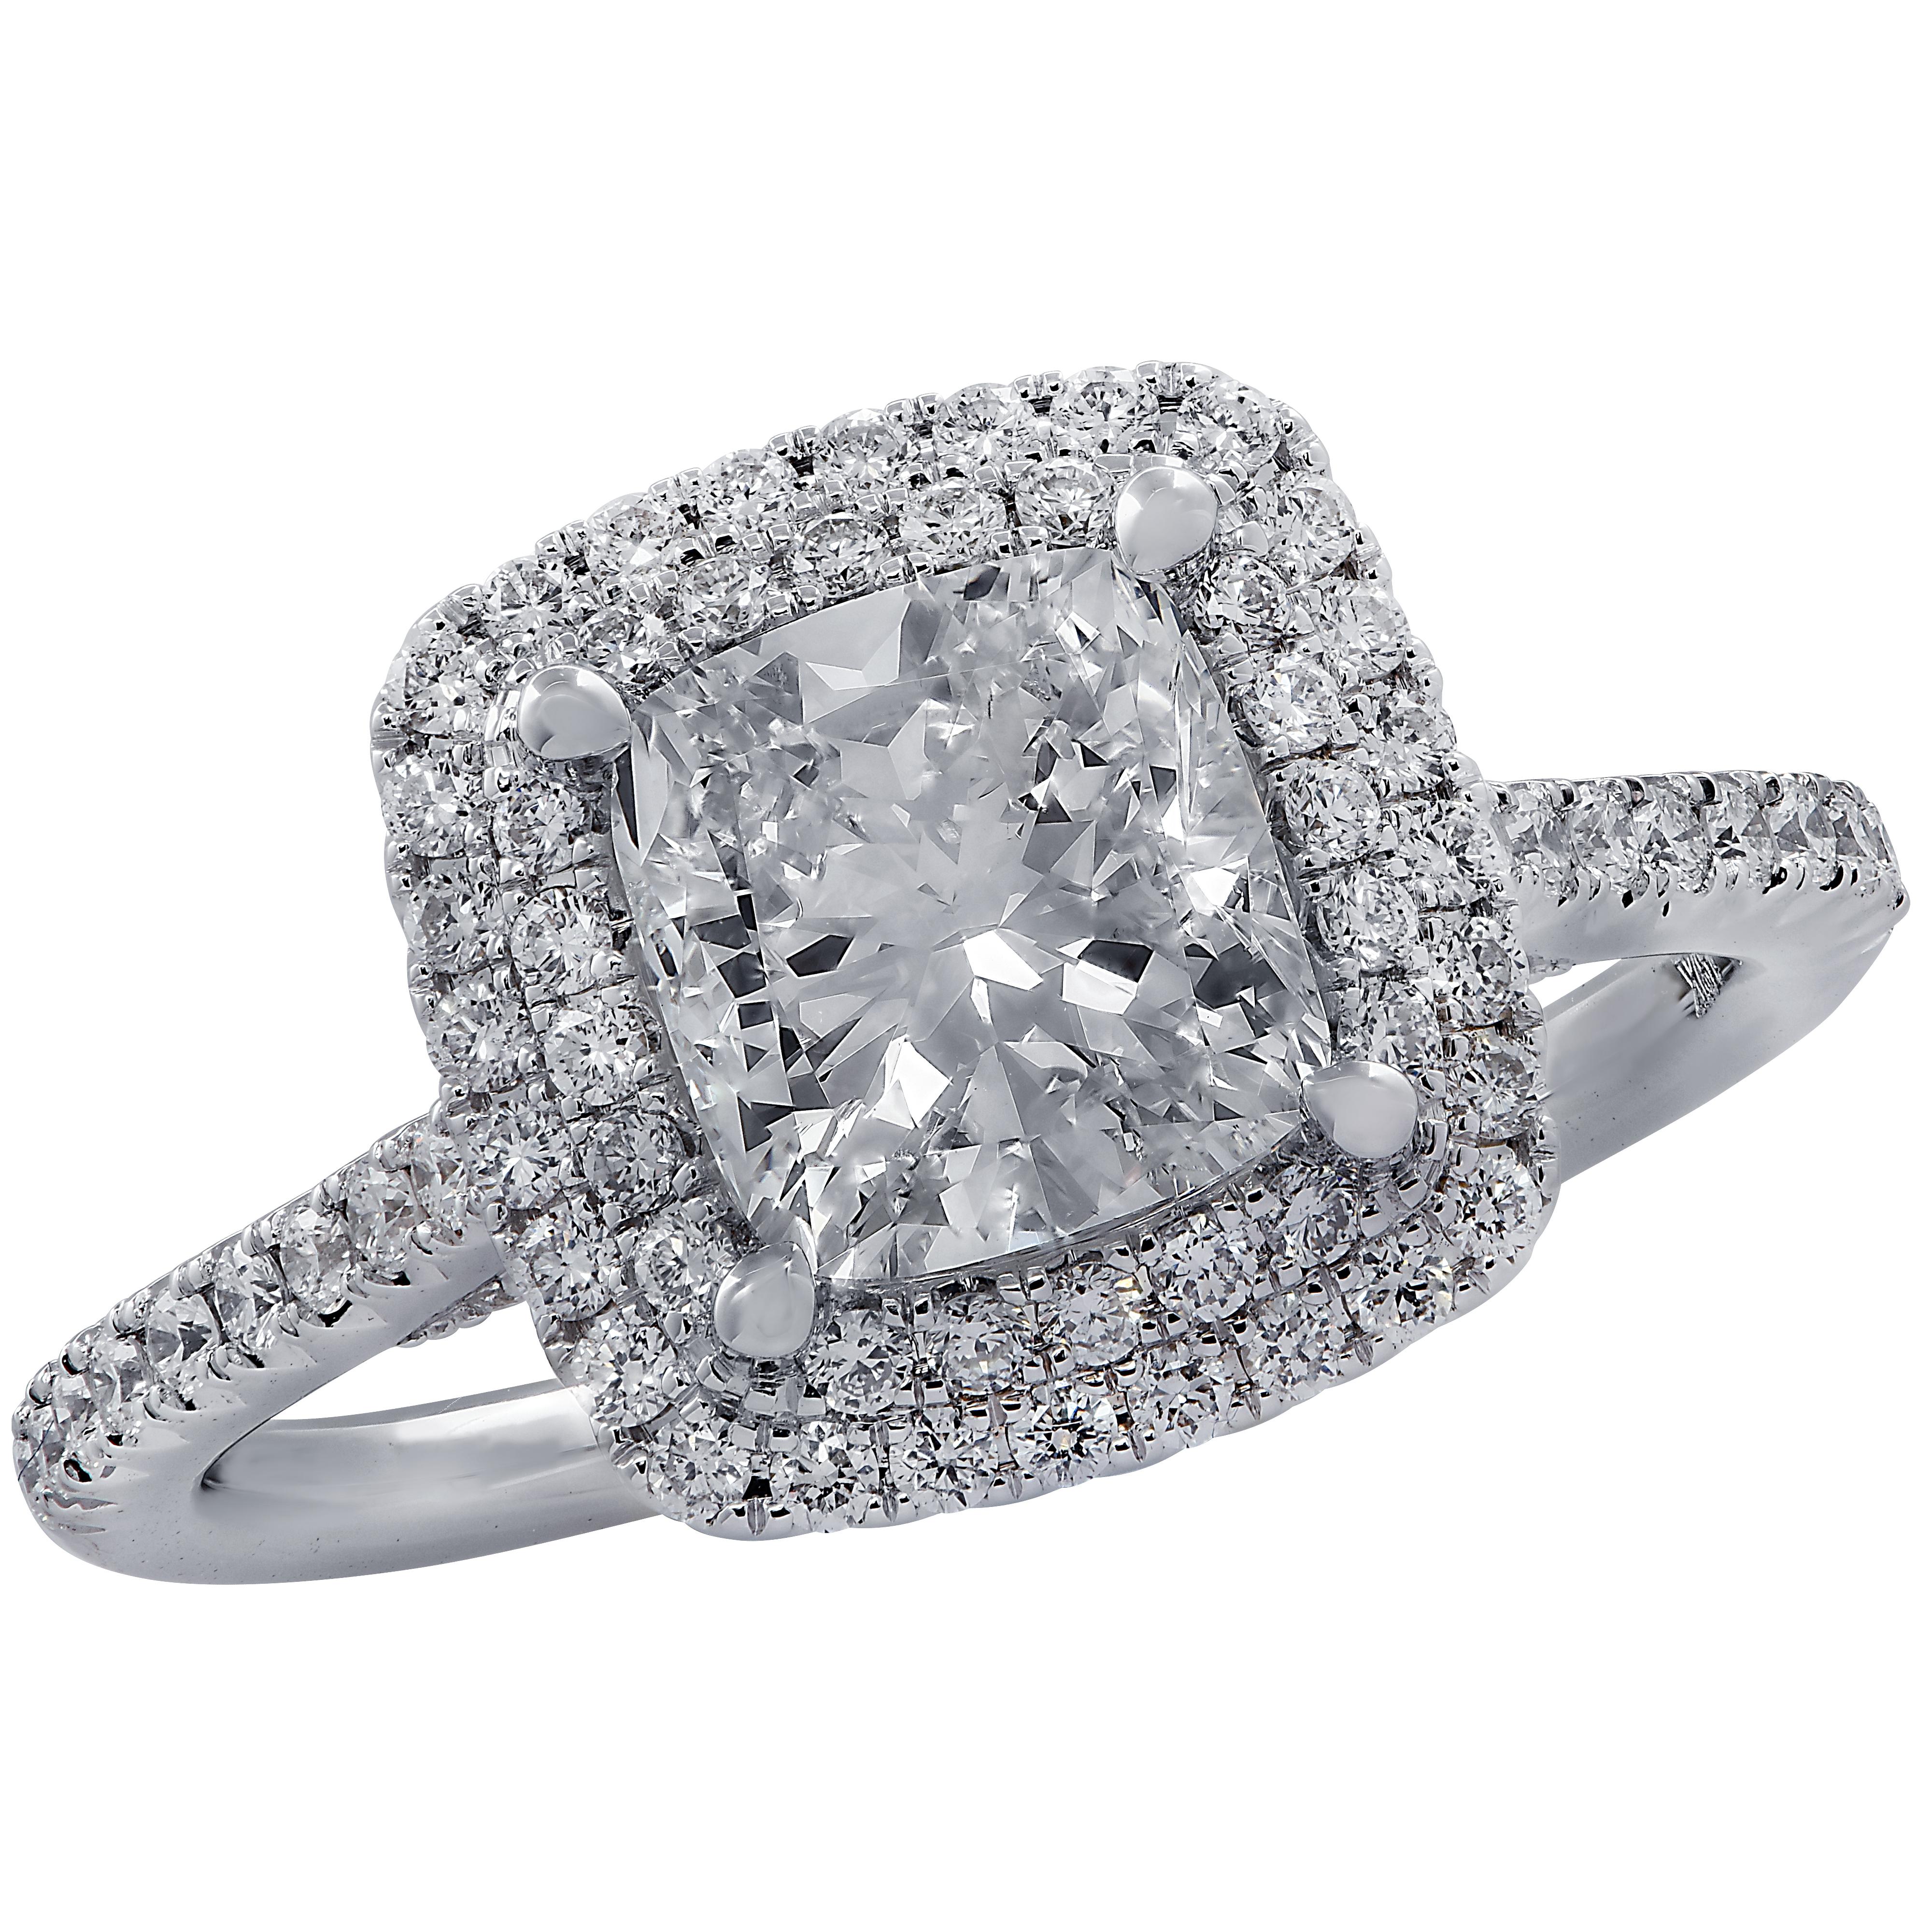 Vivid Diamonds GIA Certified 1.51 Carat Double Halo Ring